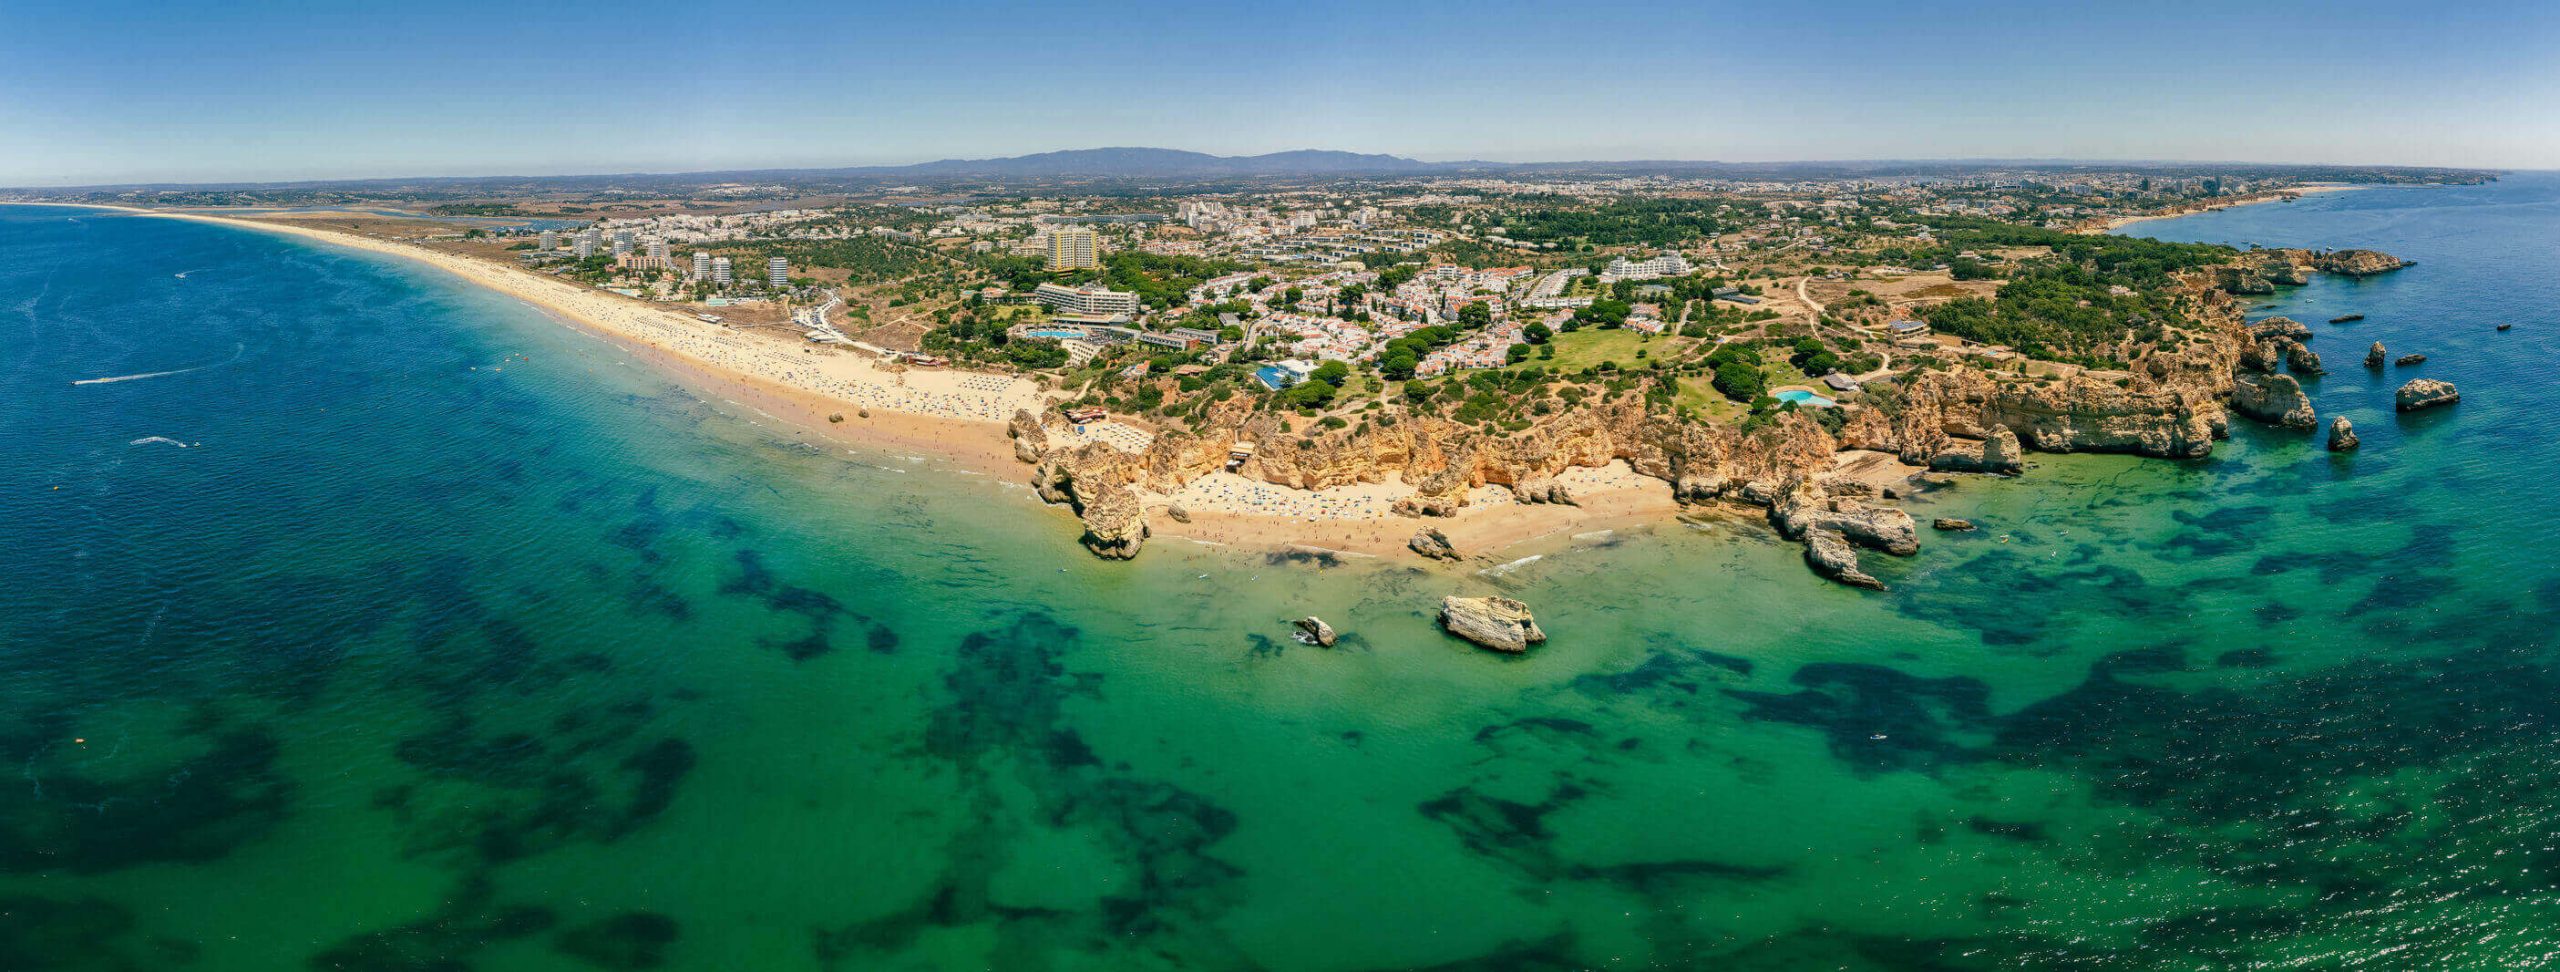 Alvor beach - aerial view